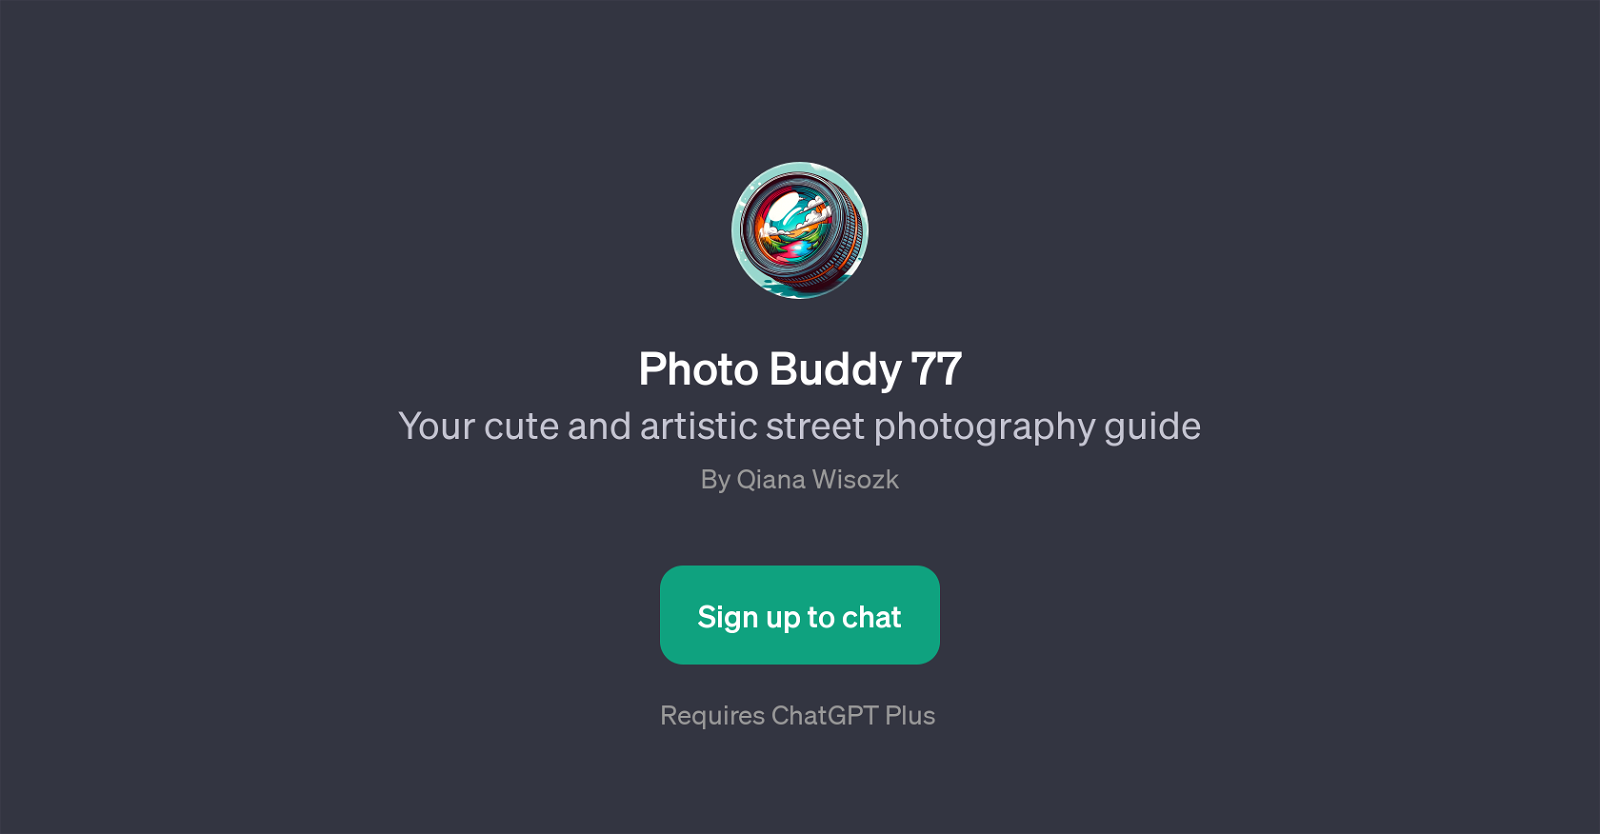 Photo Buddy 77 website